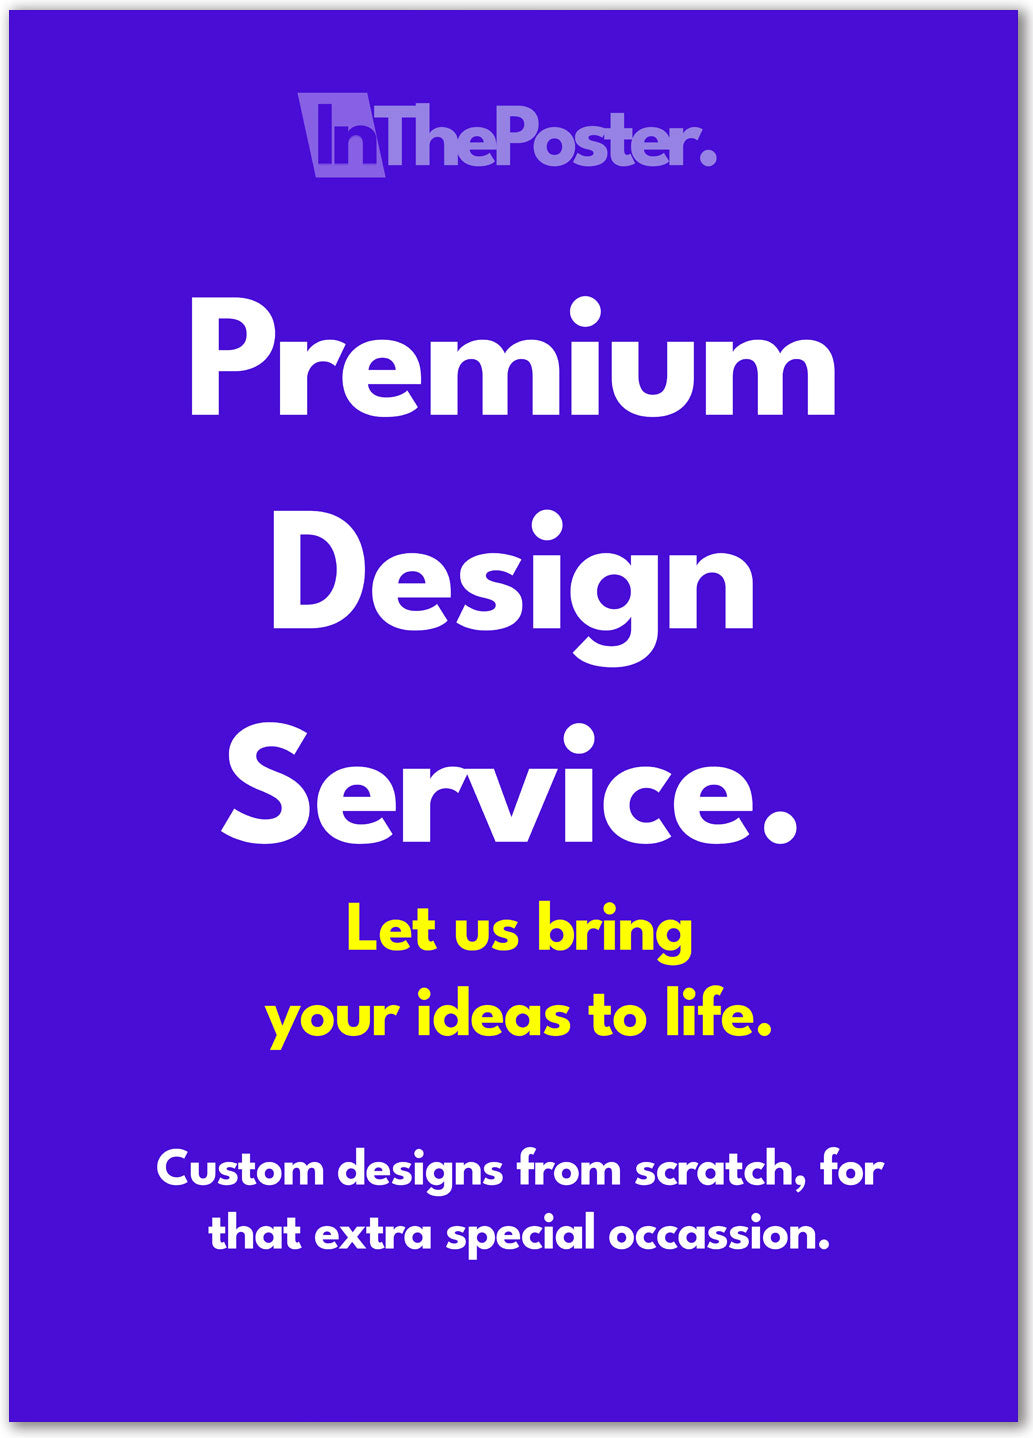 A description of a Premium Custom Poster Design Service with a logo on a blue background